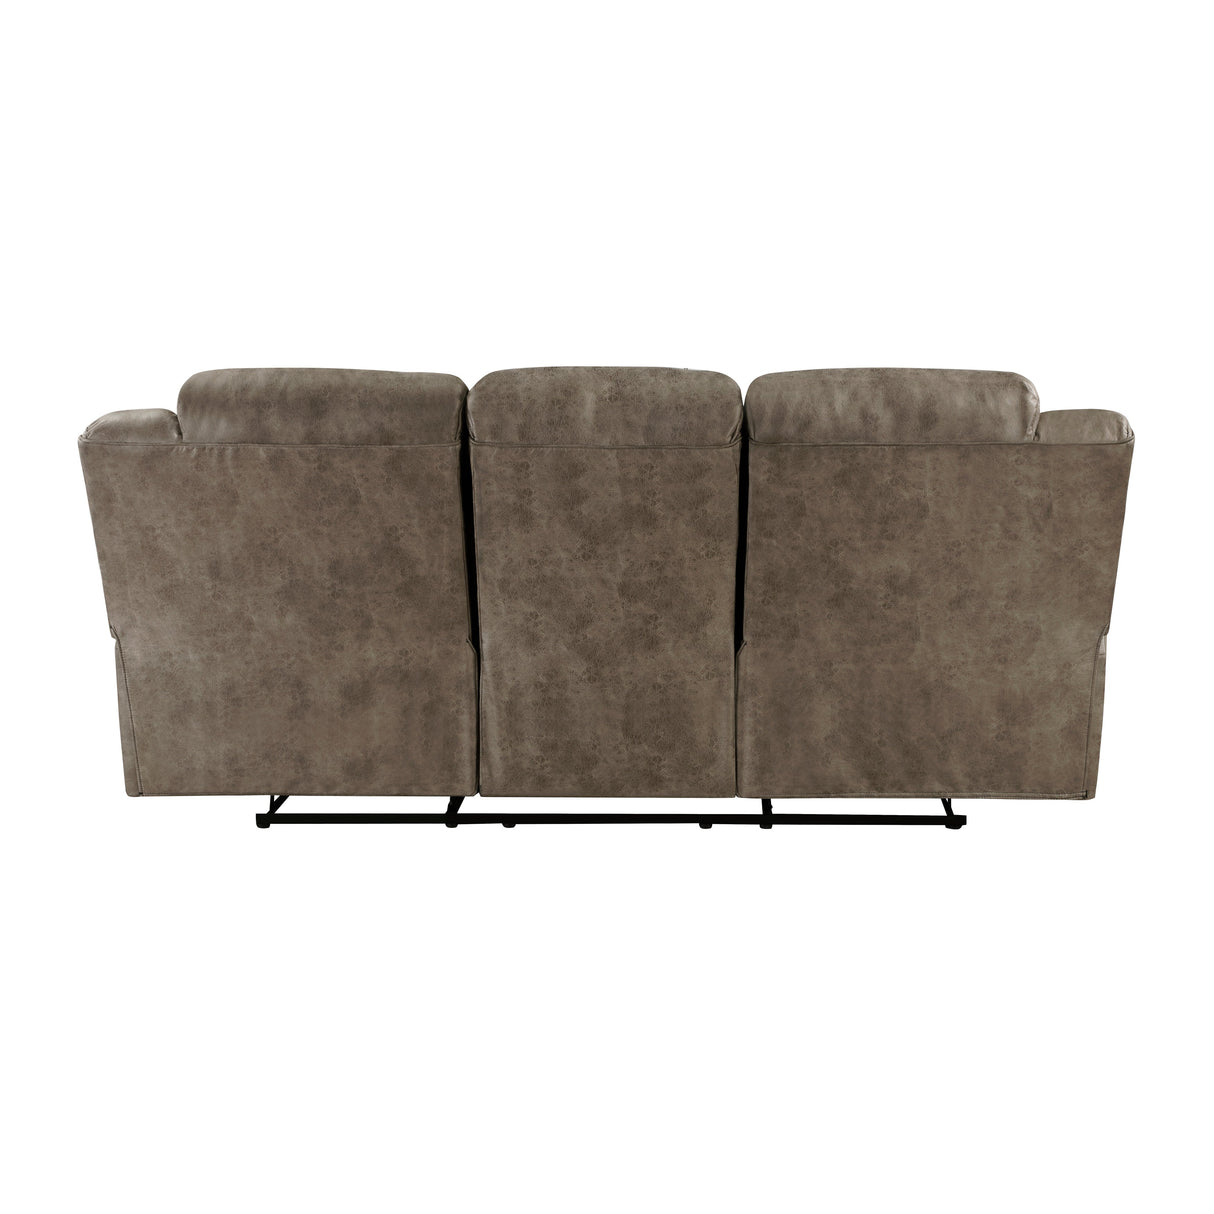 Hazen Brown Microfiber Double Reclining Sofa